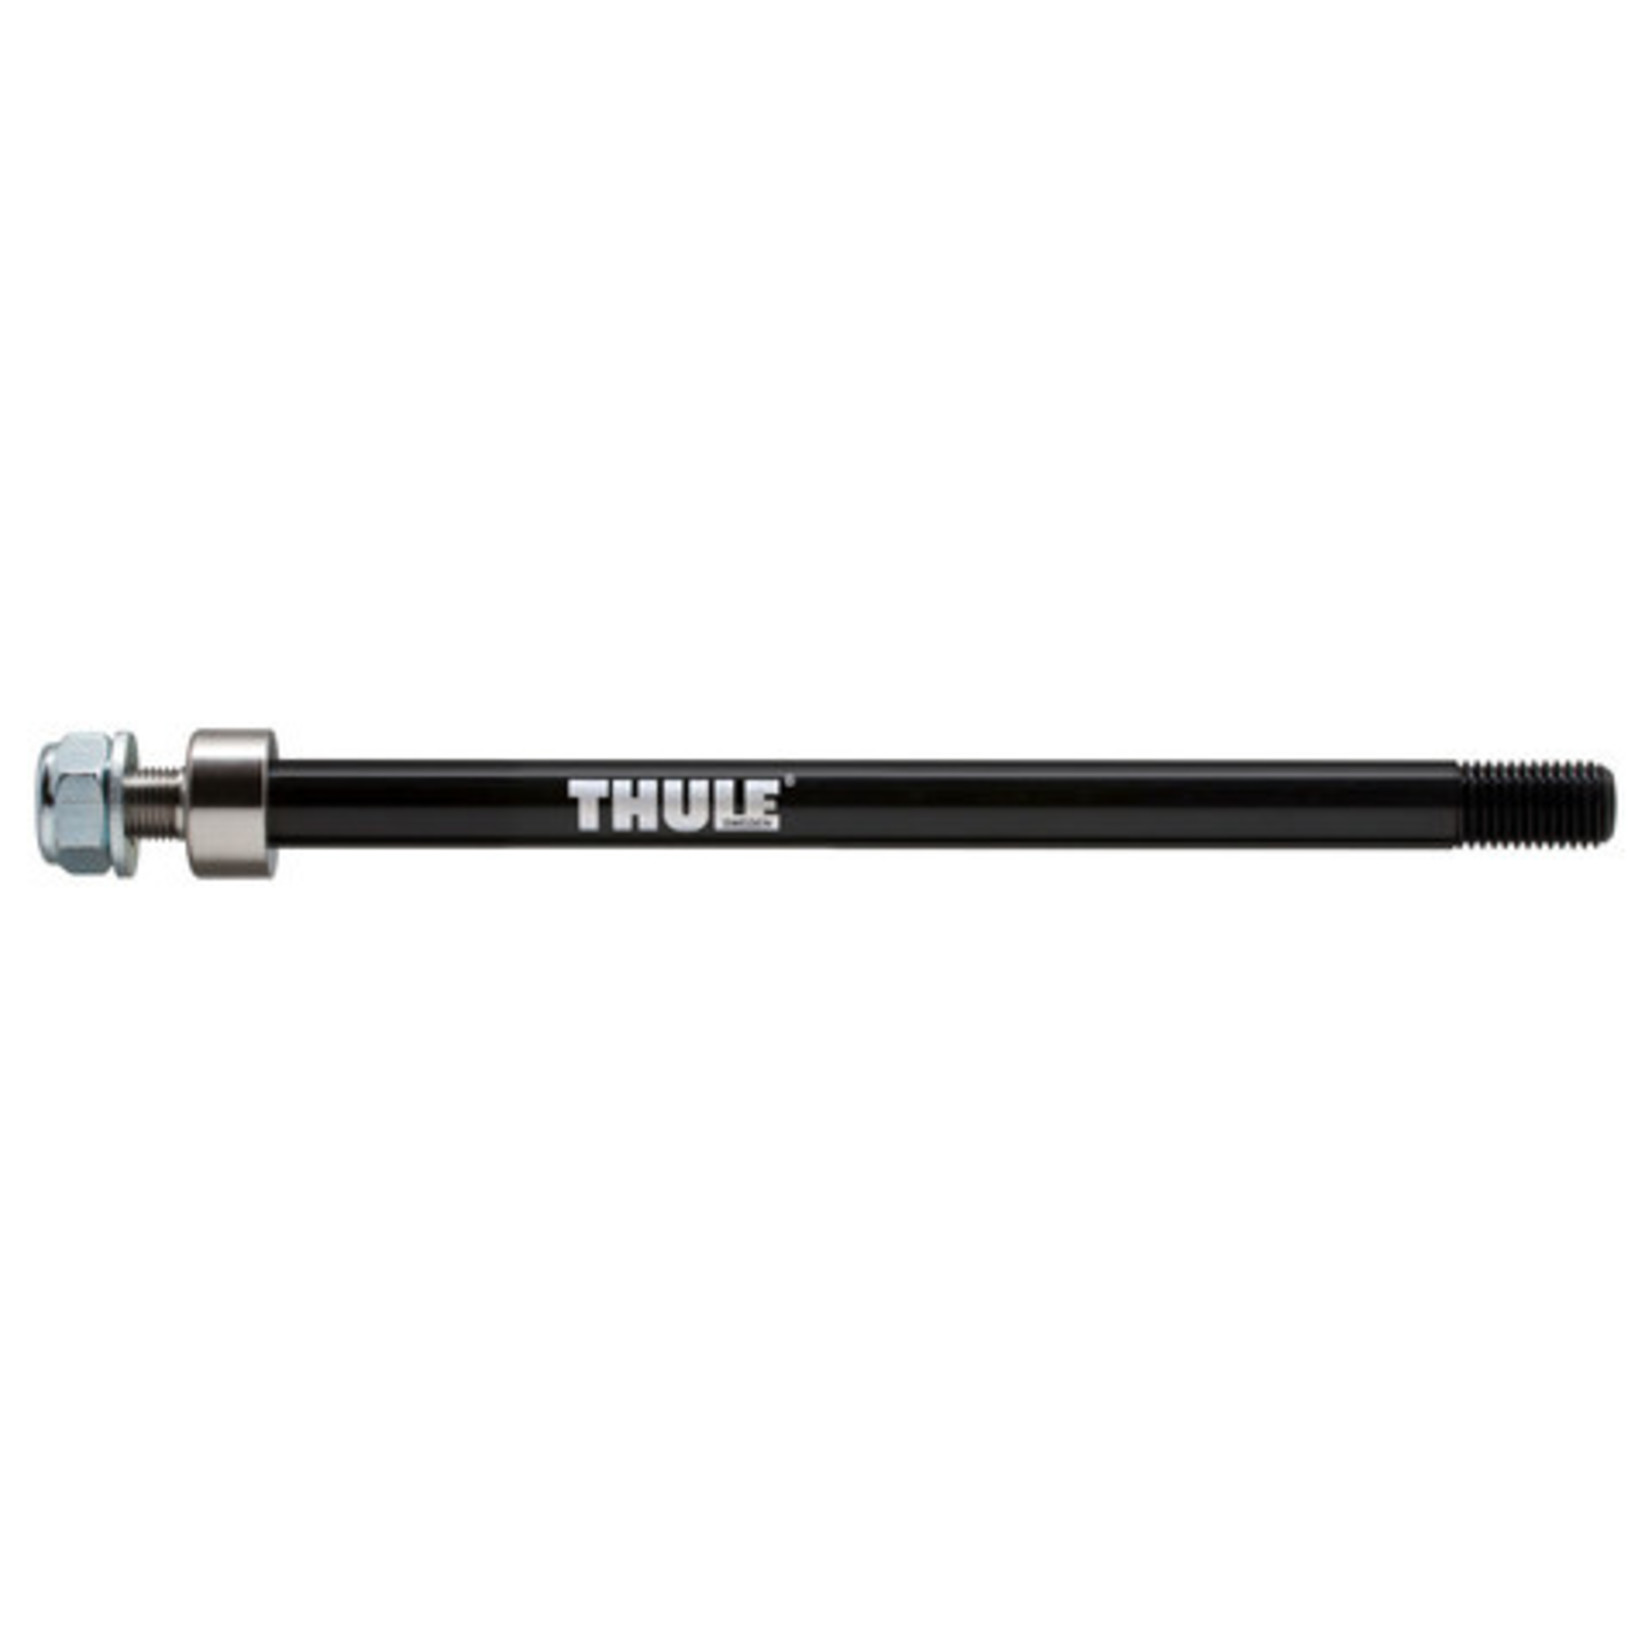 Thule Thule Thru Axle Maxle (M12 x 1.75) Adapter 209mm 20110736 - Black